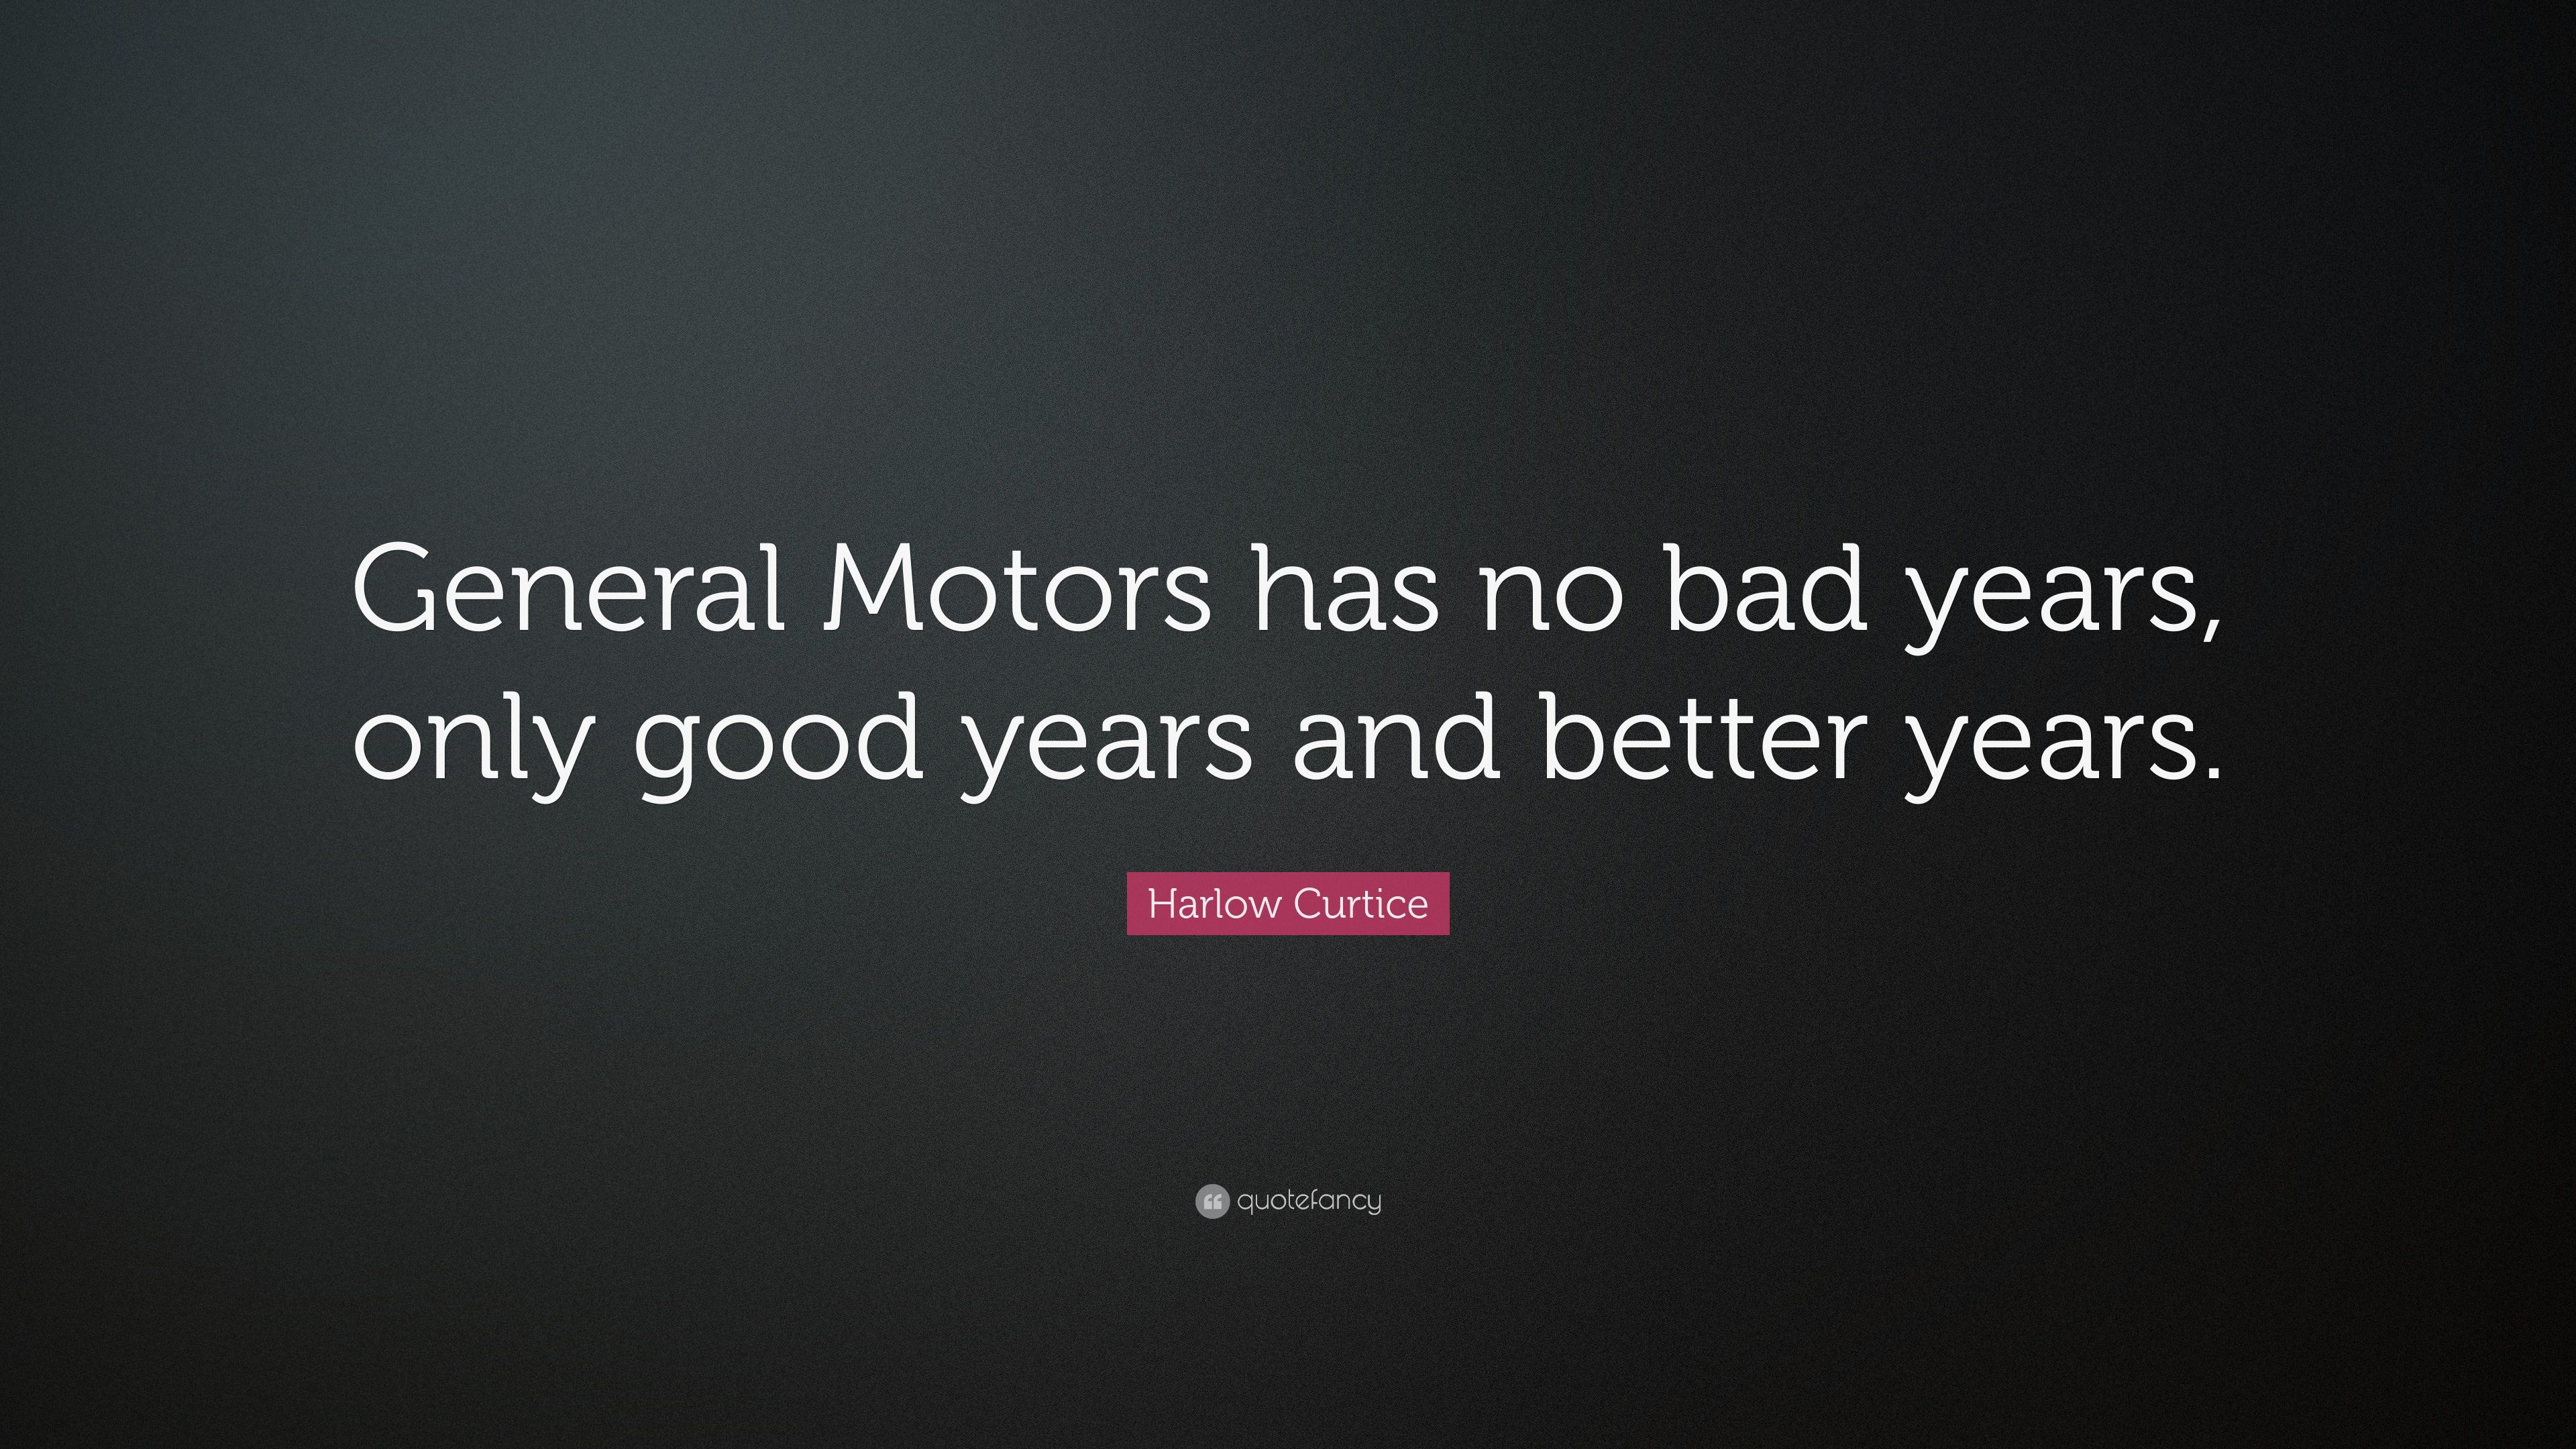 Harlow Curtice Quote: “General Motors .quotefancy.com